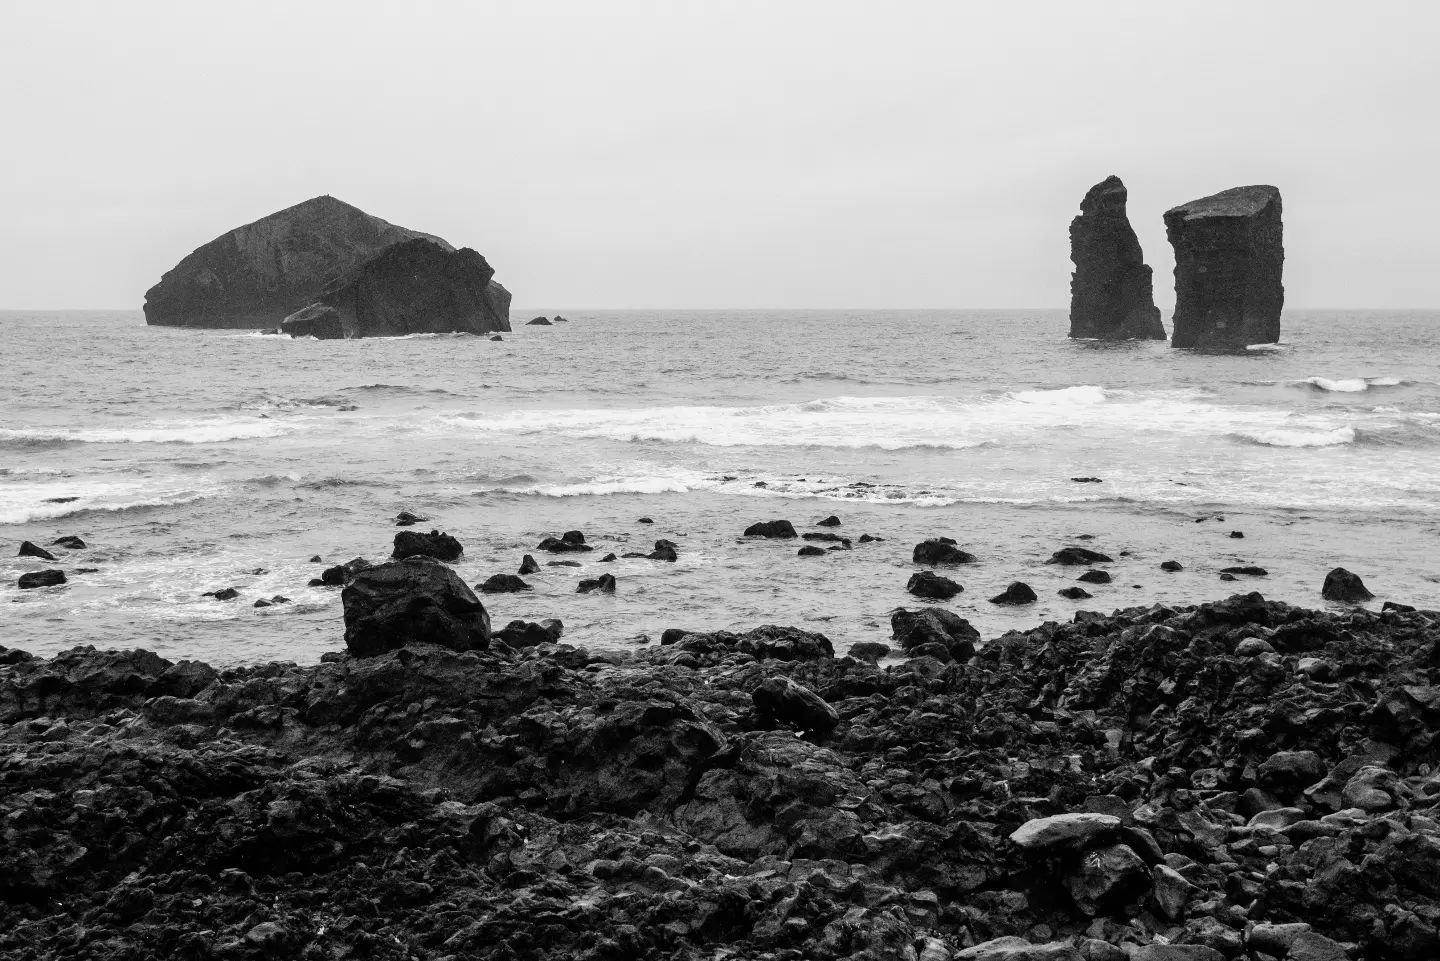 Really felt like Iceland's little brother on that beach

#2017 #azores #blackbeach #rocks #travelphotography #travelphotographer